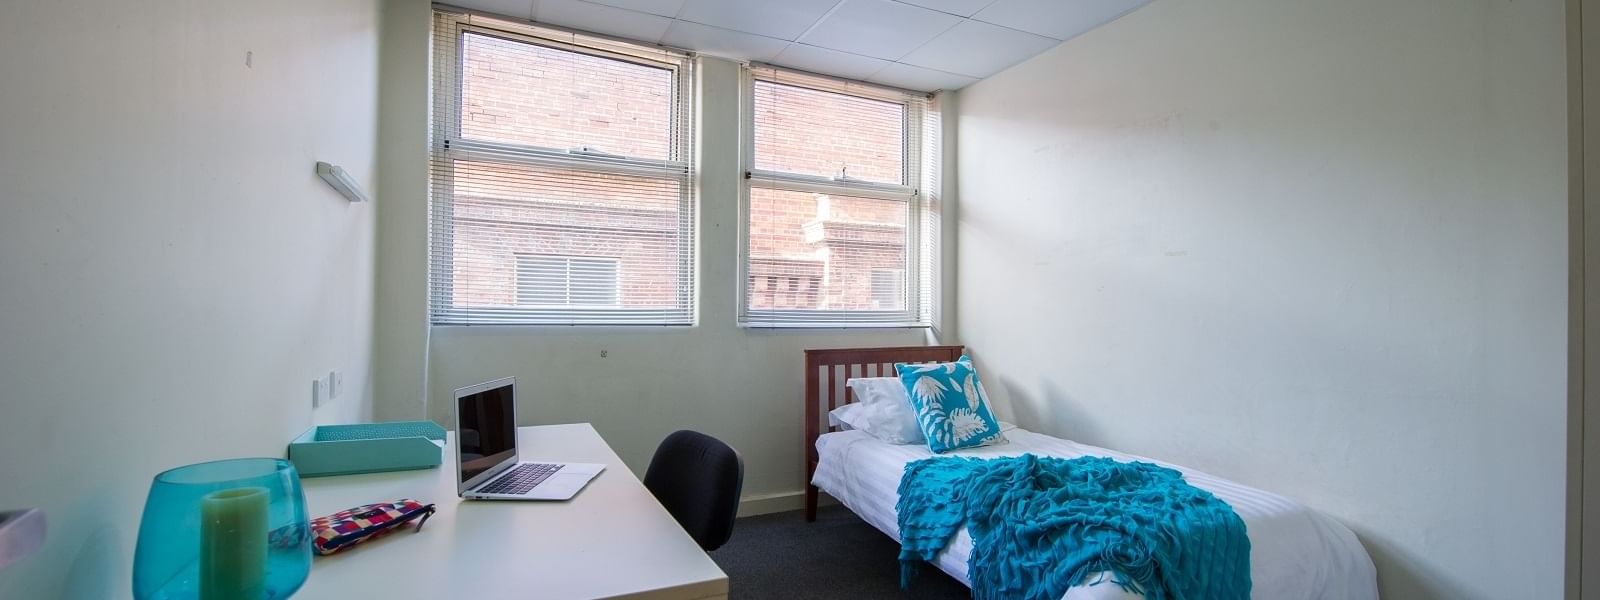 Student Living - Tobin House - 3 bedroom apartment